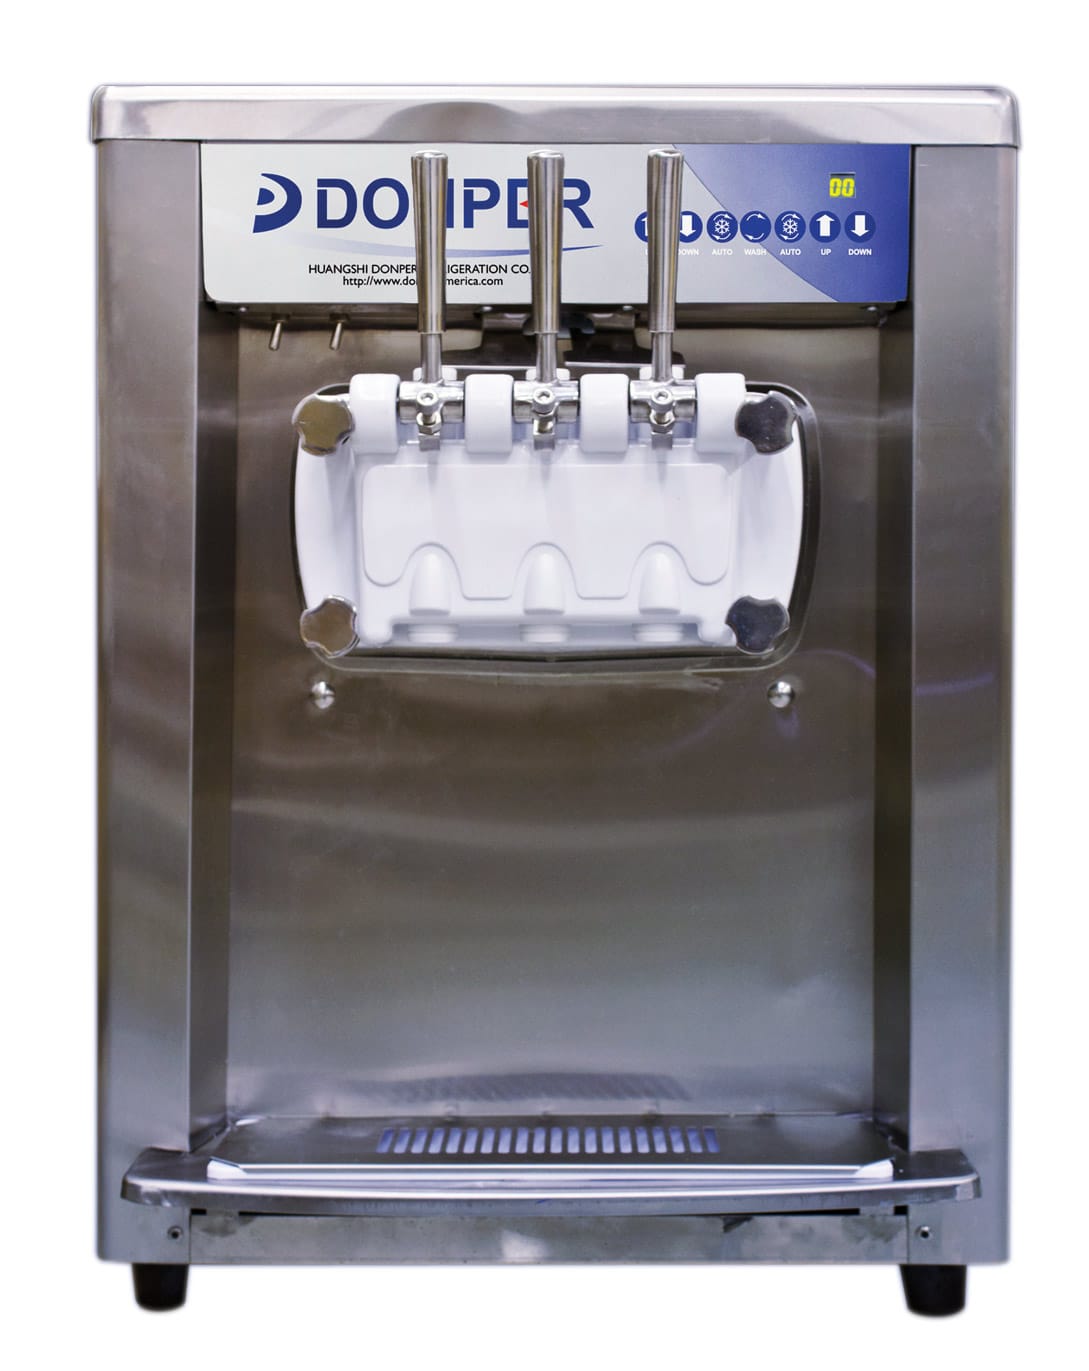 donper-soft-service-ice-cream-machine